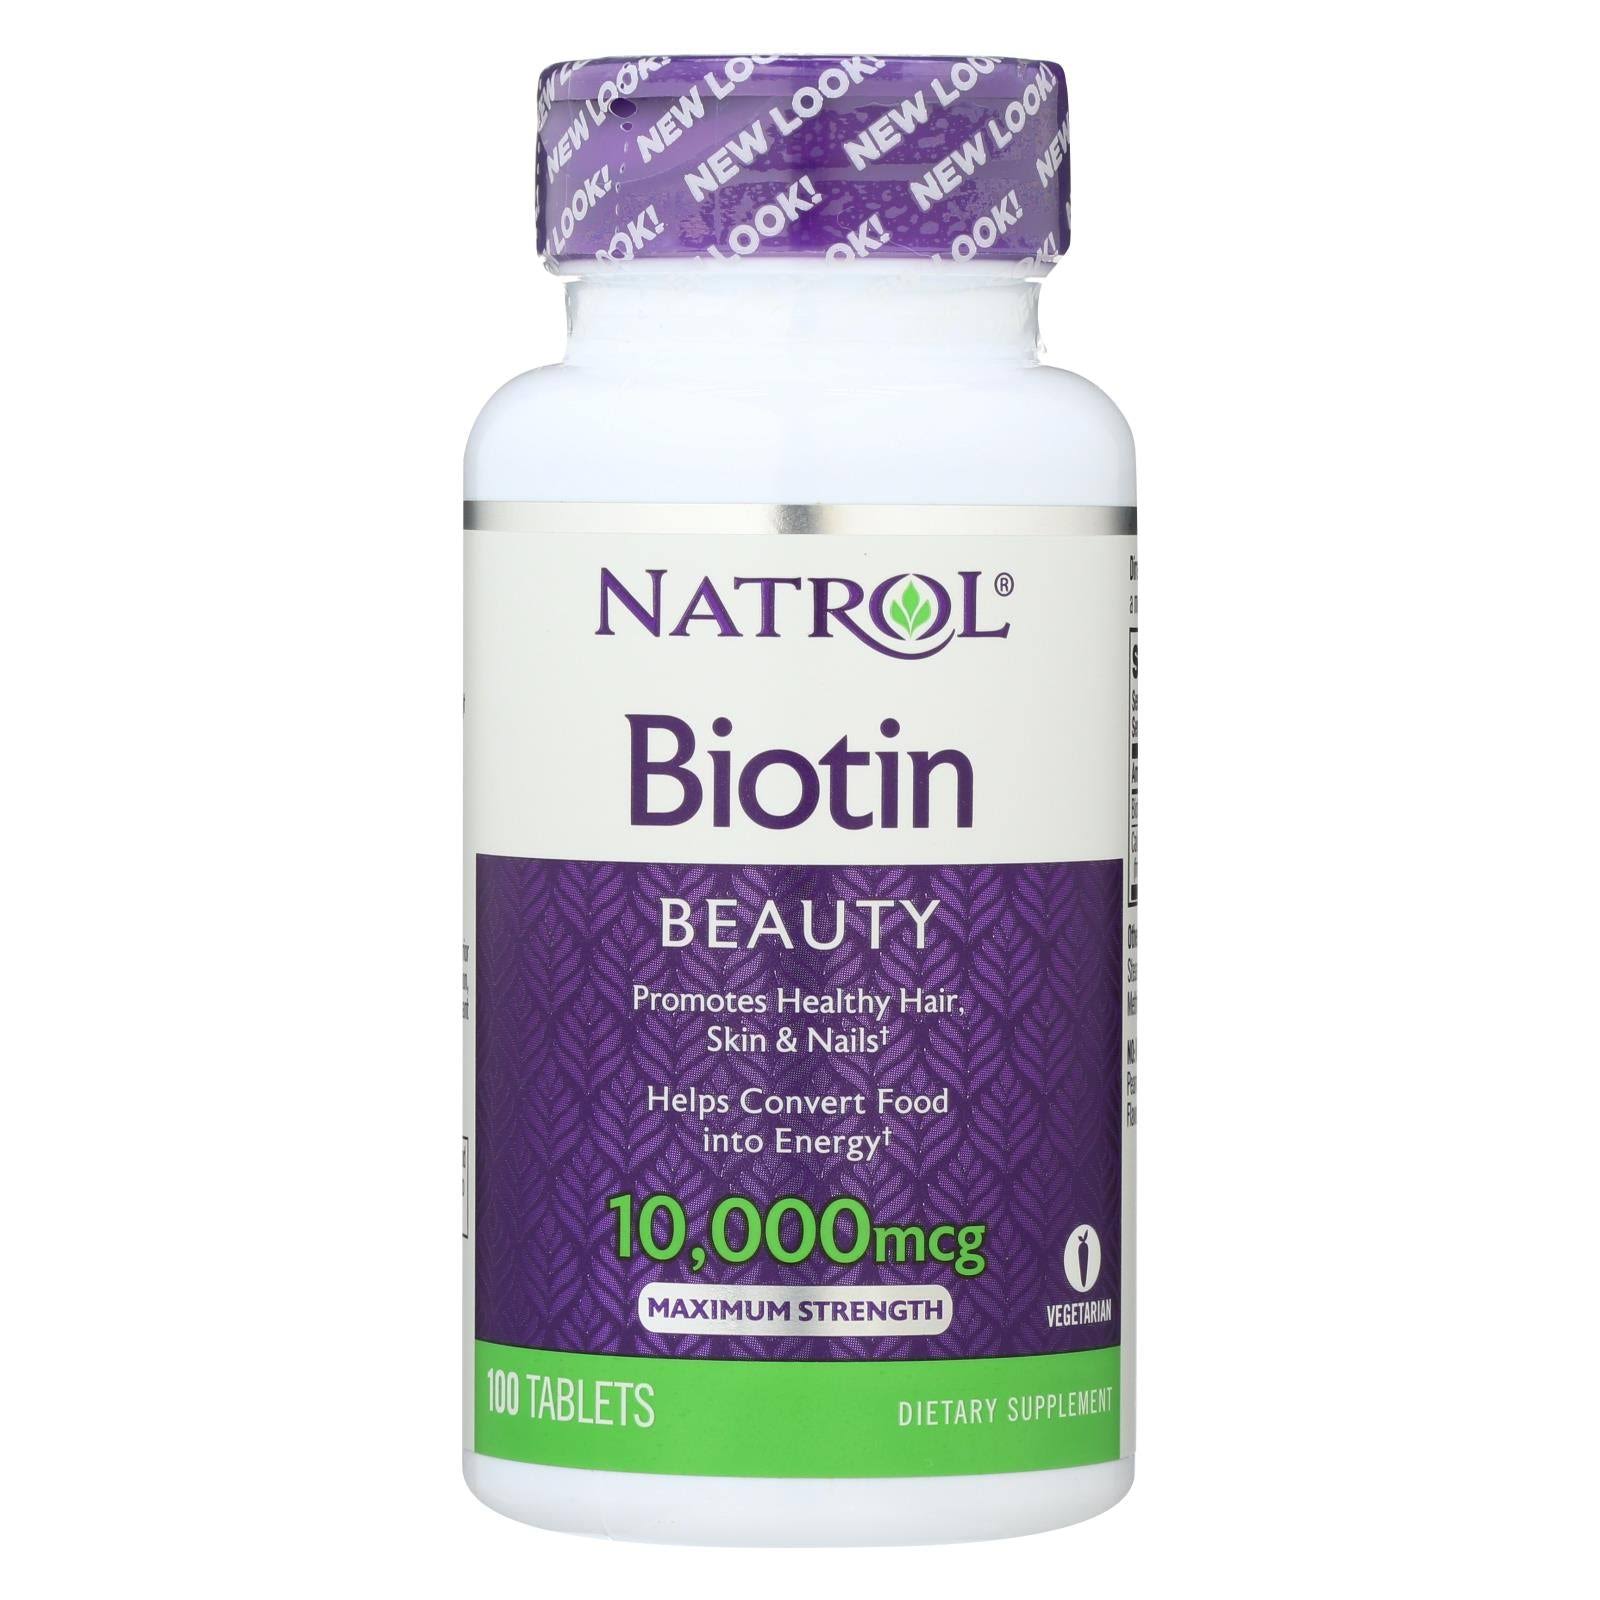 NATROL - Biotin 10000 mcg Maximum Strength - 100 Tablets